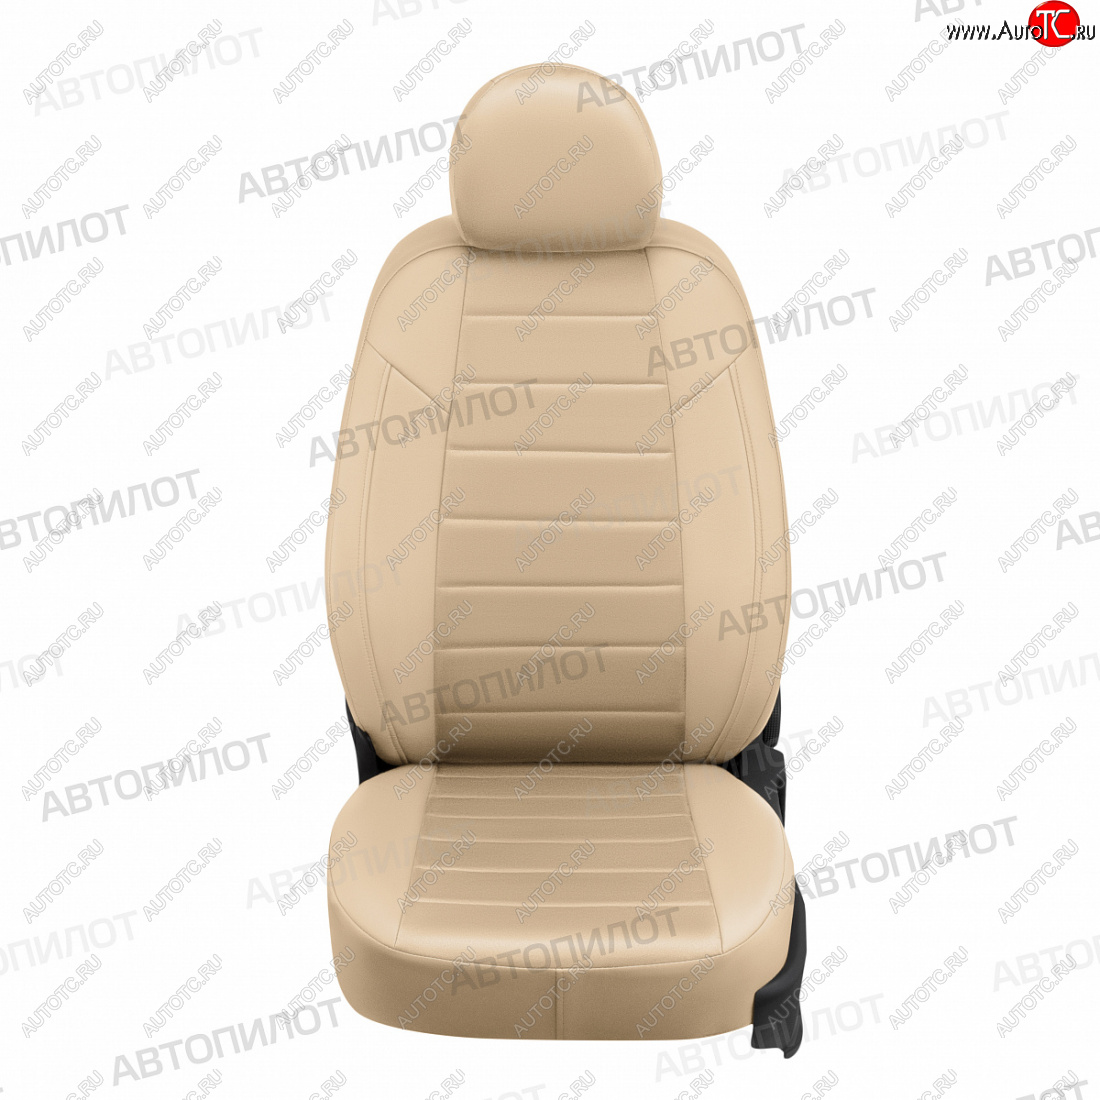 7 499 р. Чехлы сидений (экокожа/алькантара) Автопилот Honda CR-V RD4,RD5,RD6,RD7,RD9  дорестайлинг (2001-2004) (бежевый)